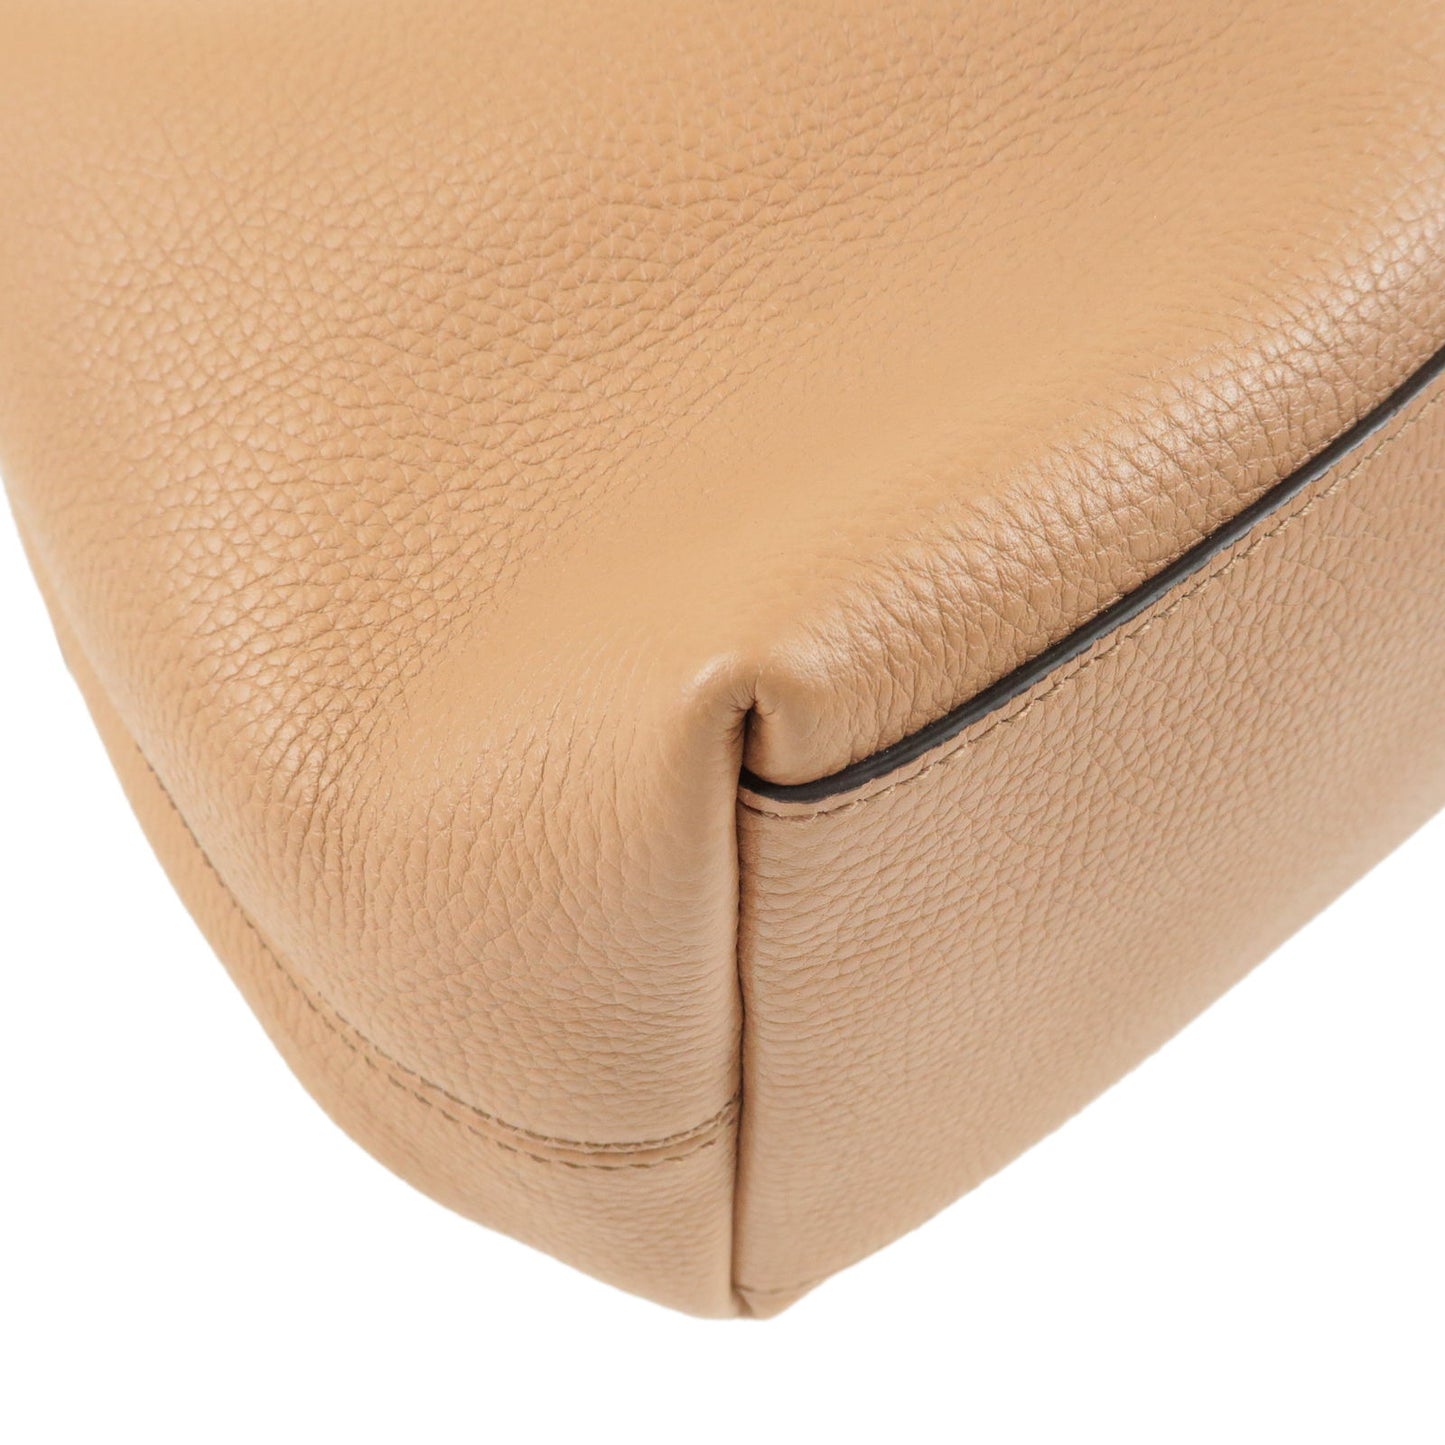 GUCCI SOHO Leather Chain Shoulder Bag Tote Bag Beige 536196